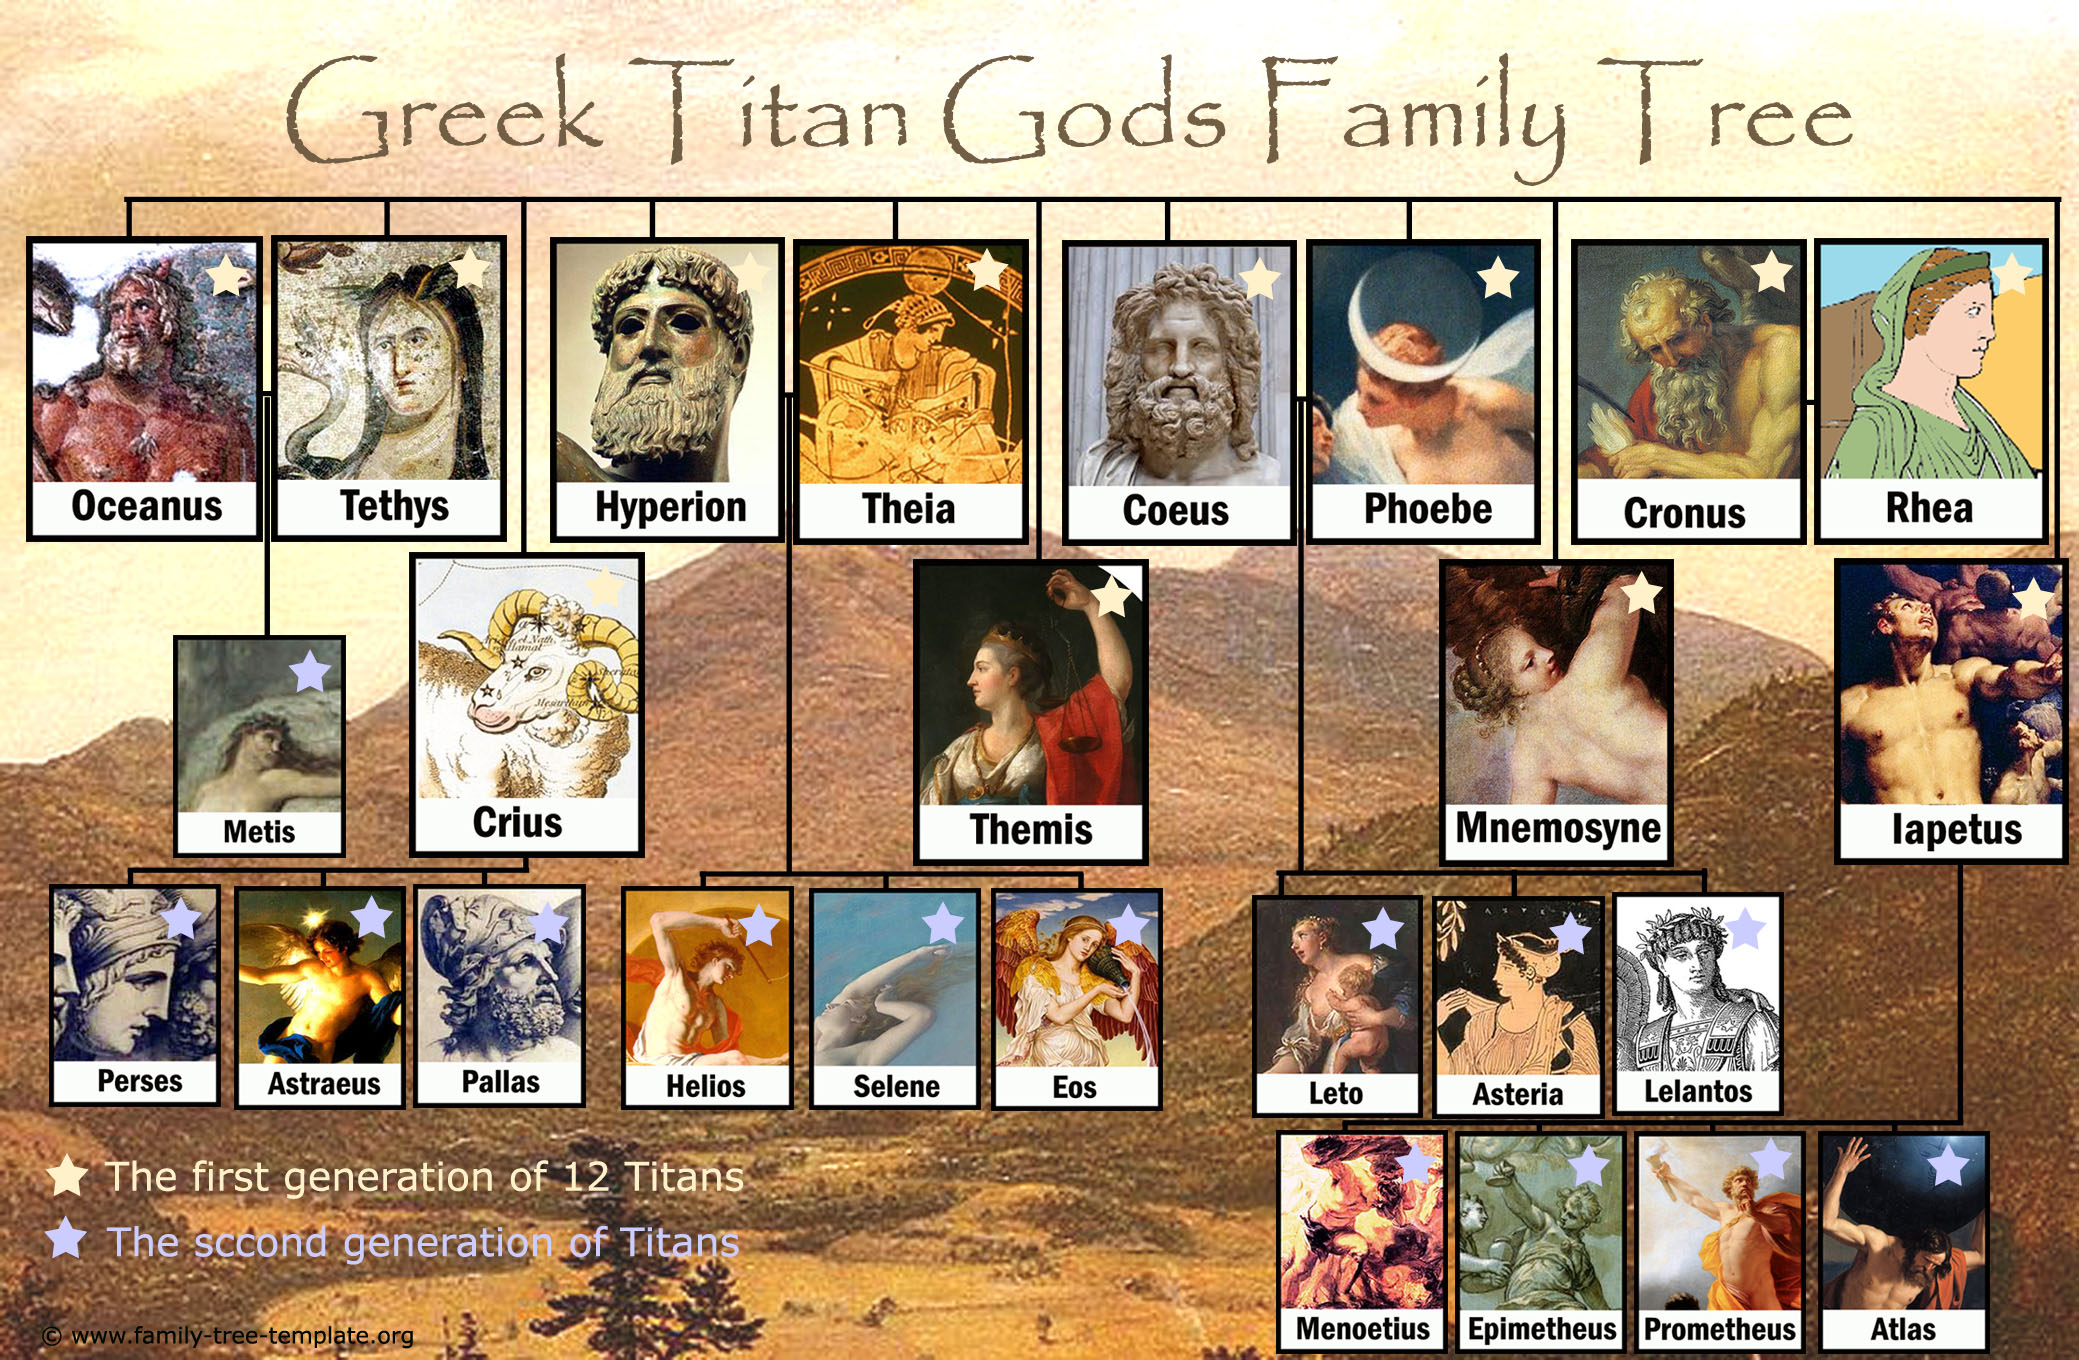 Printable family tree of the Greek gods Titans Family Tree Template